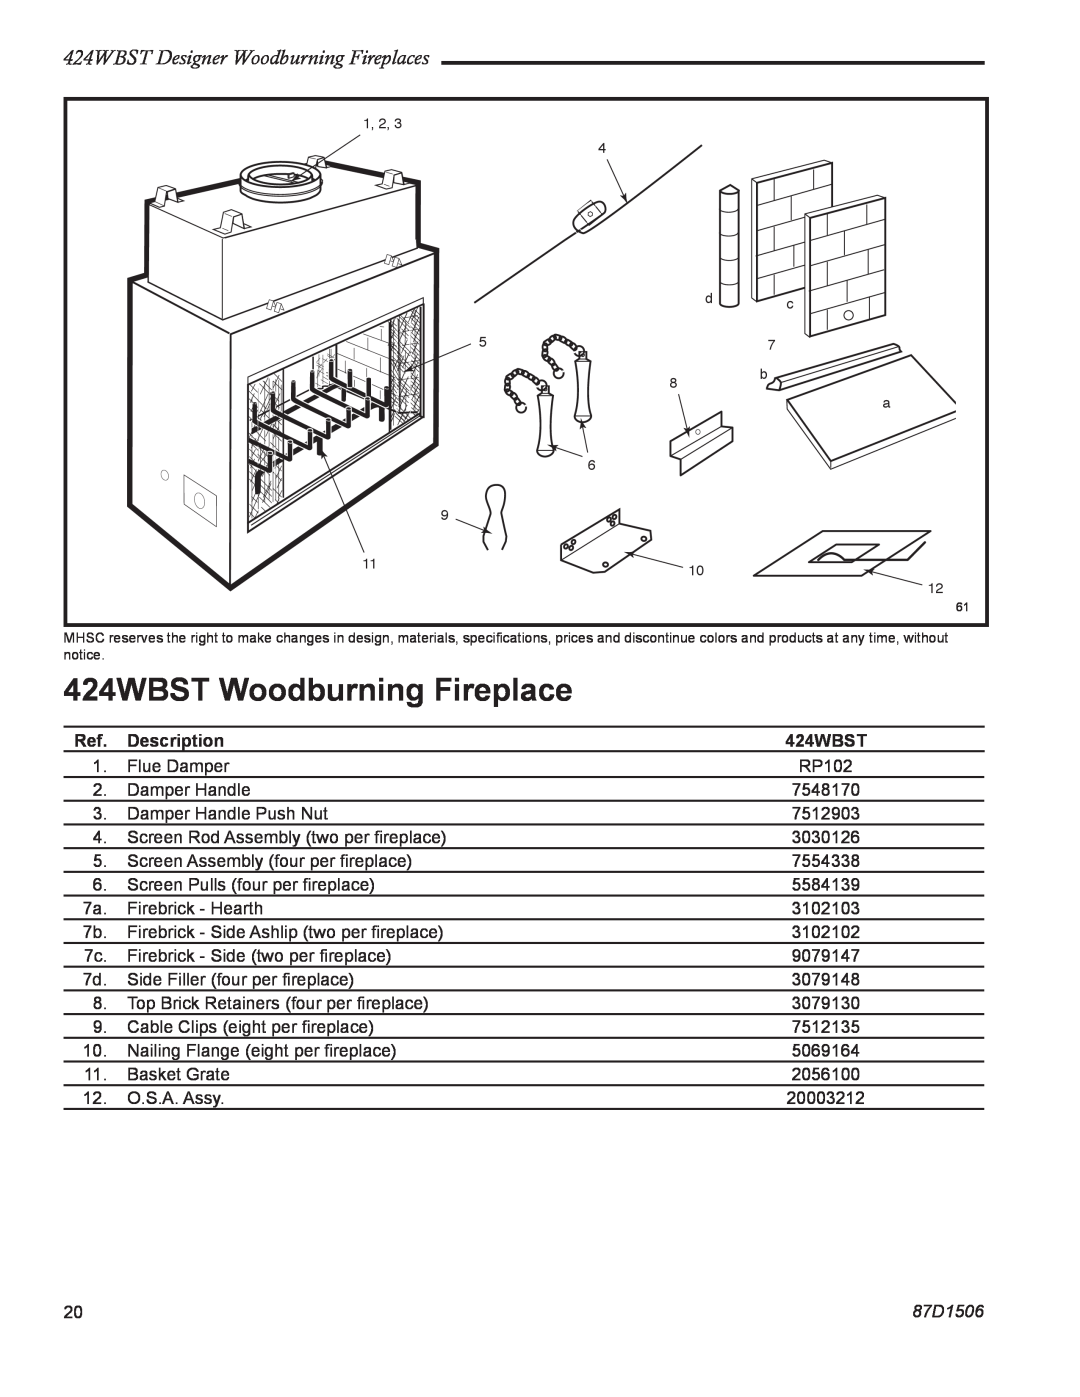 Monessen Hearth manual 424WBST Woodburning Fireplace, 424WBST Designer Woodburning Fireplaces, Description, 87D1506 